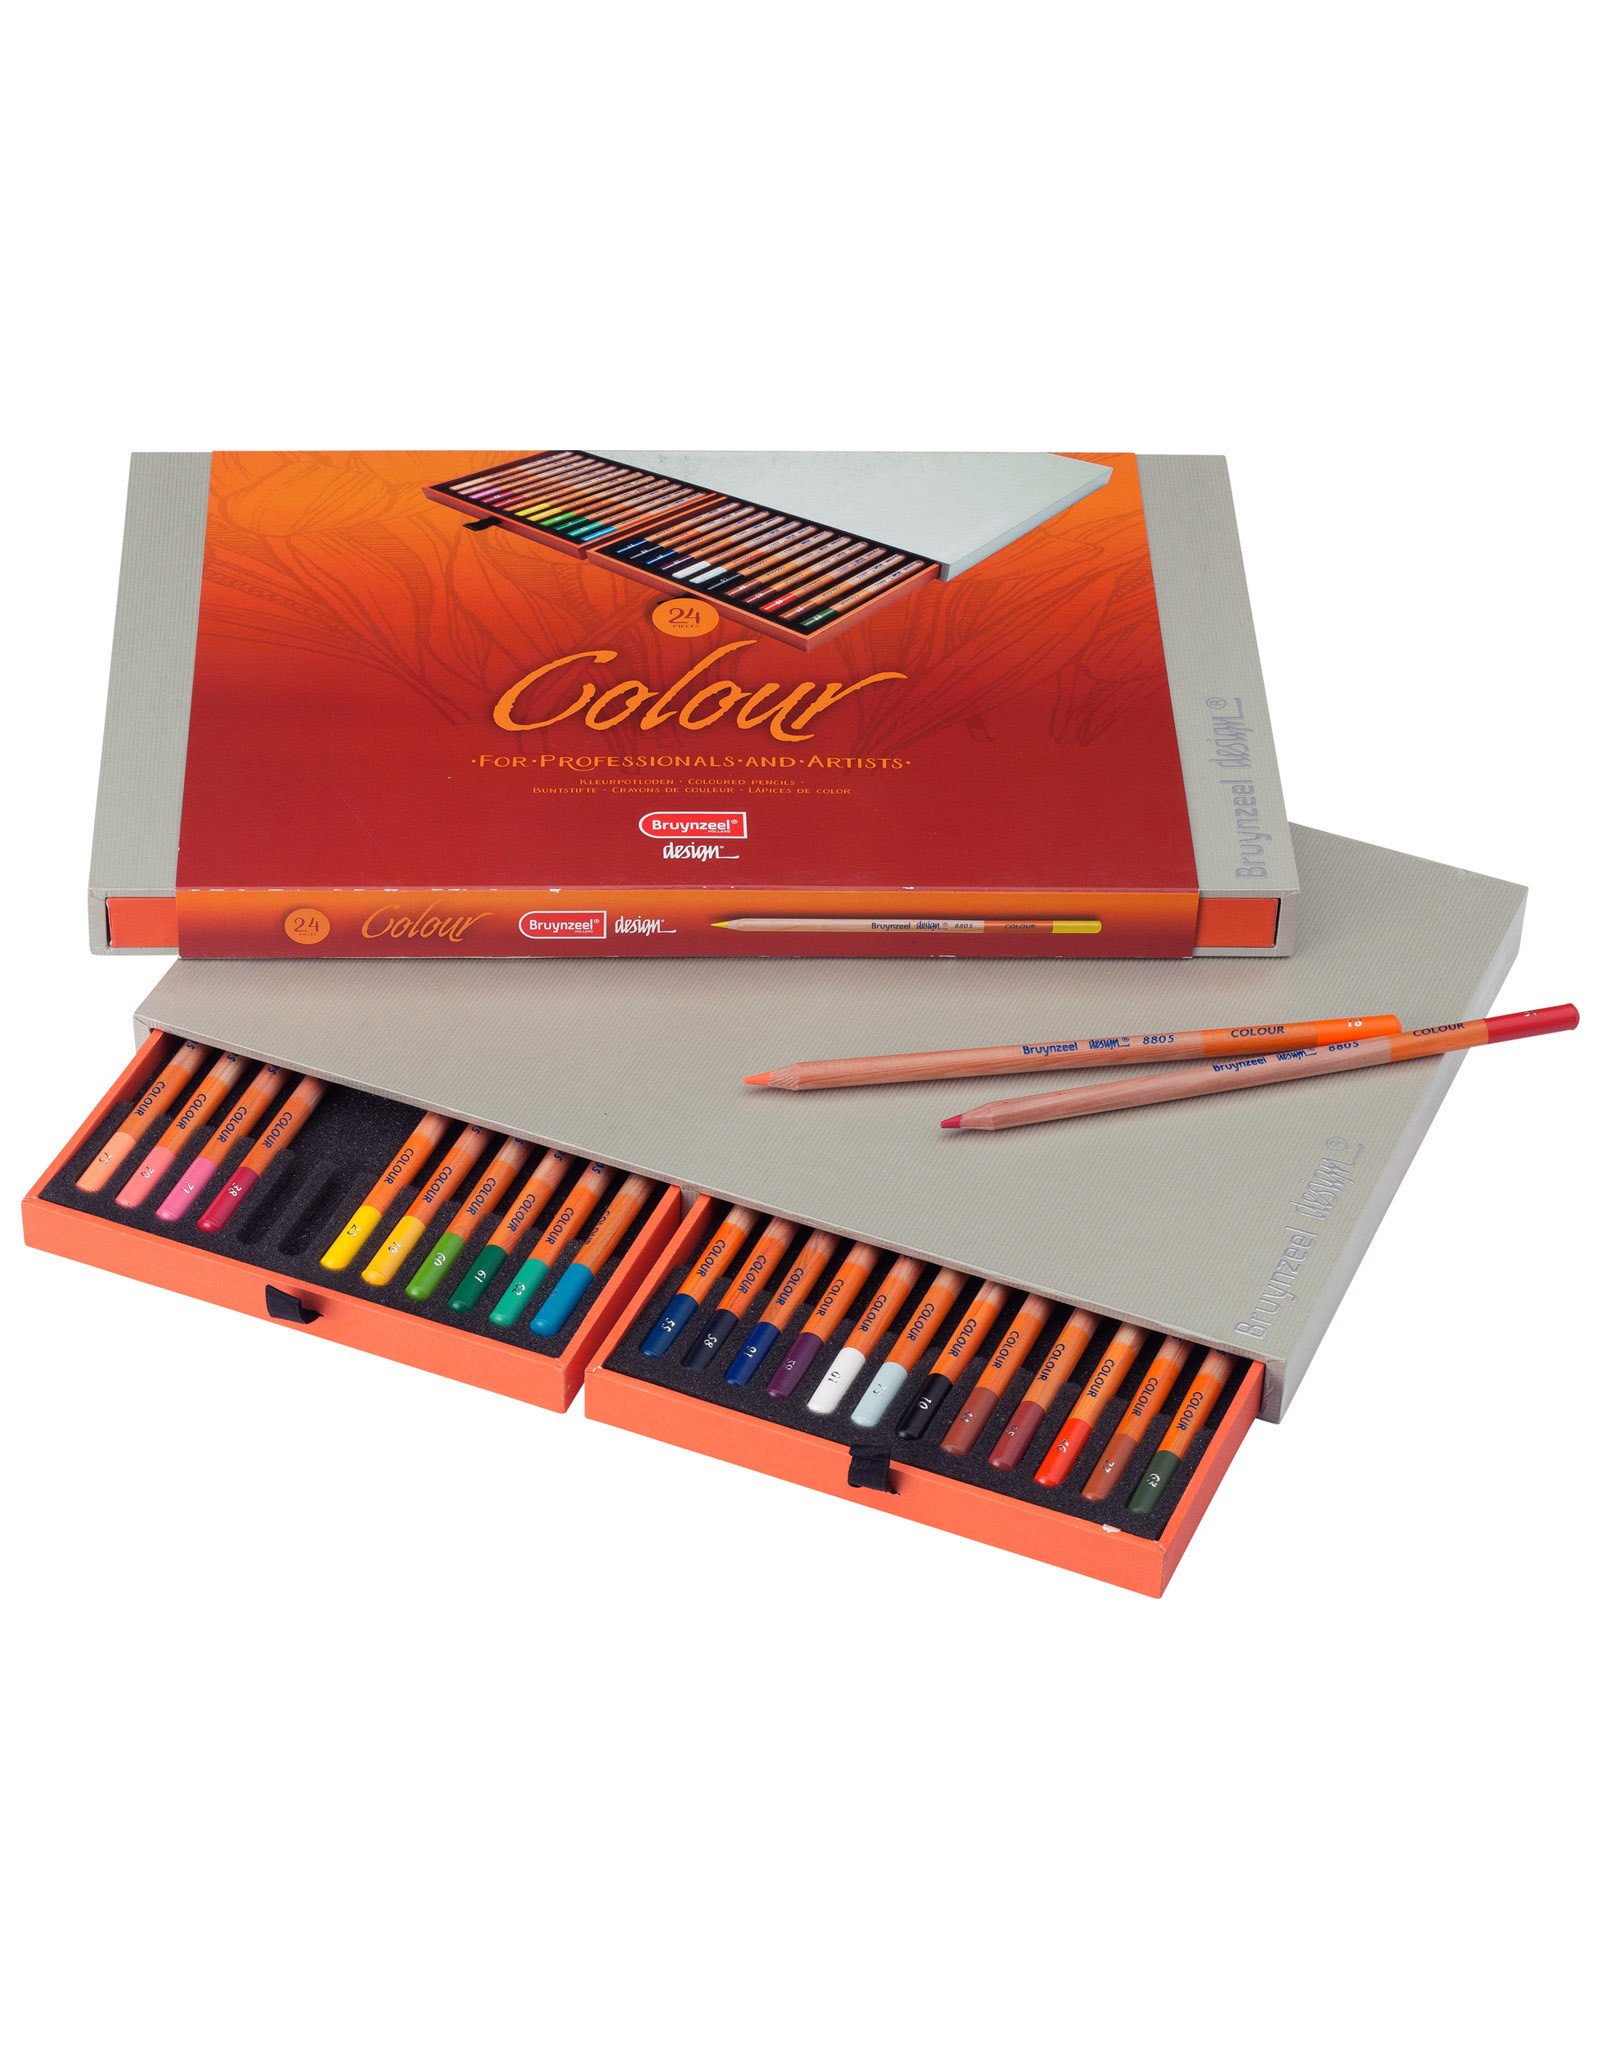 Royal Talens Bruynzeel Design Coloured Pencils, Set of 24